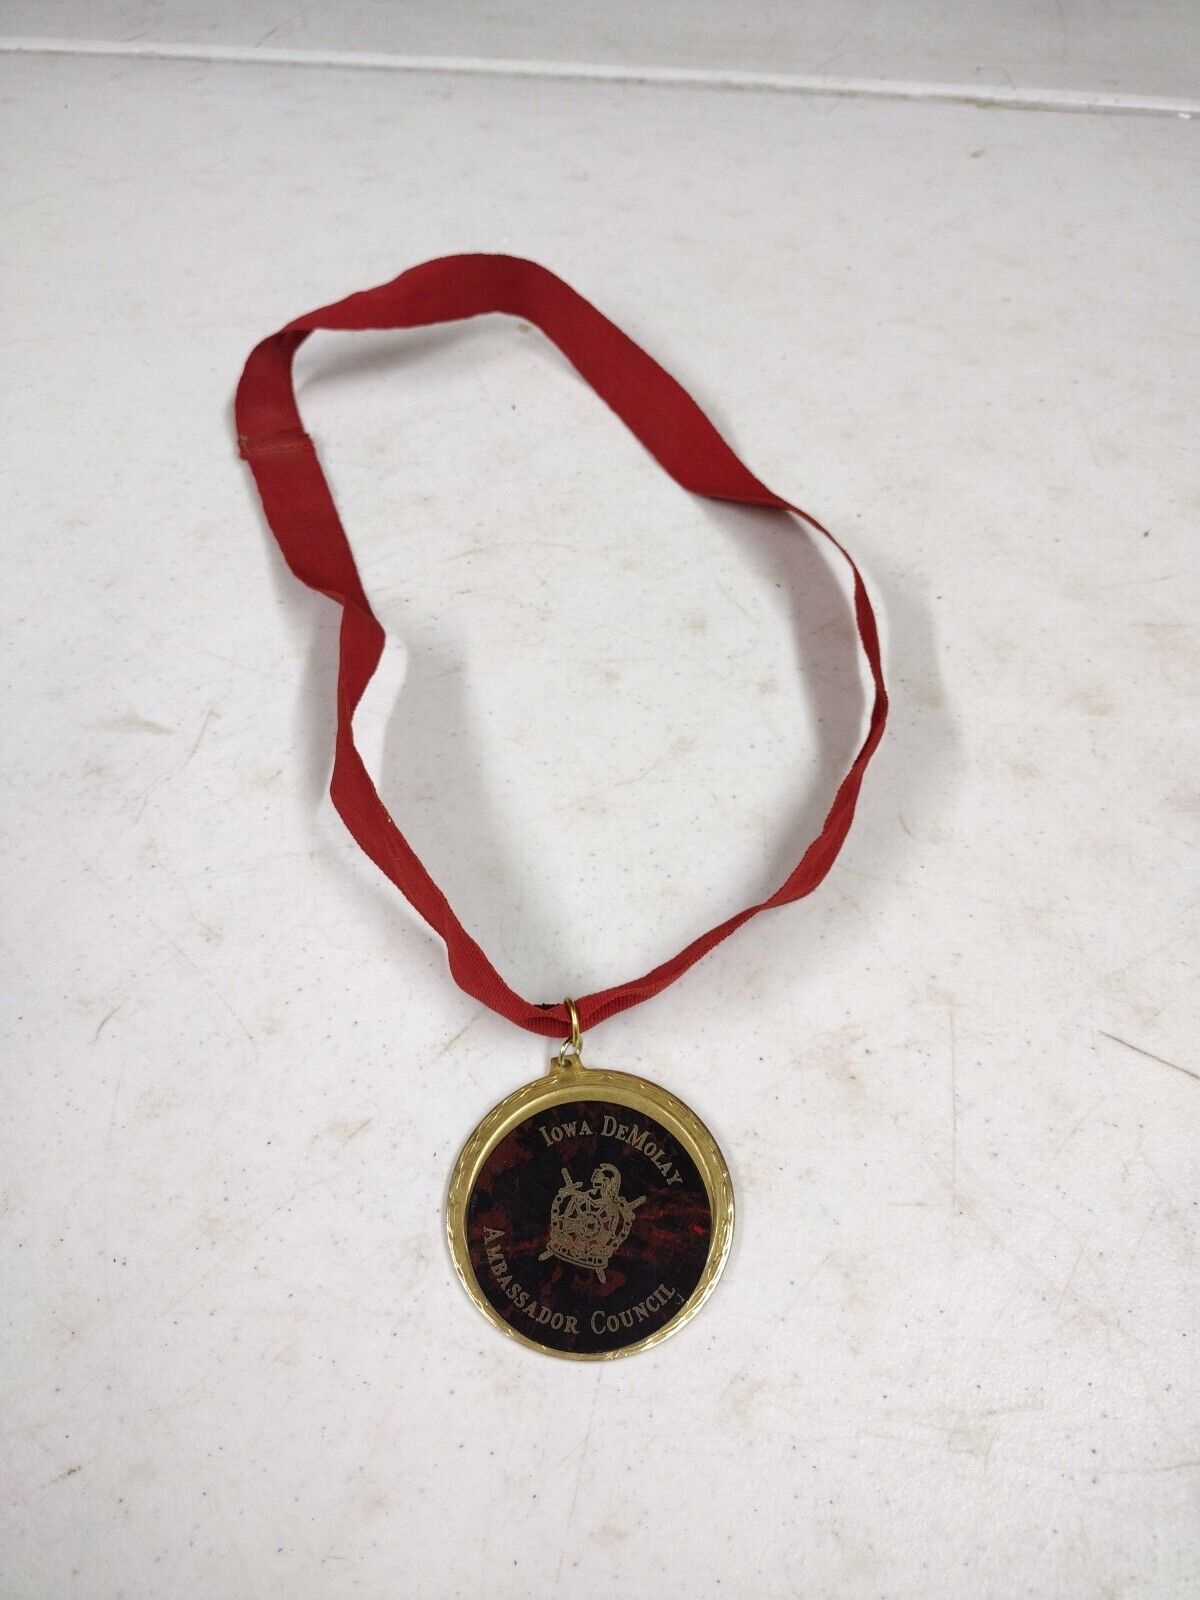 Vintage Masonic Knight\'s Templar Iowa DeMolay Ambassador Council Medal